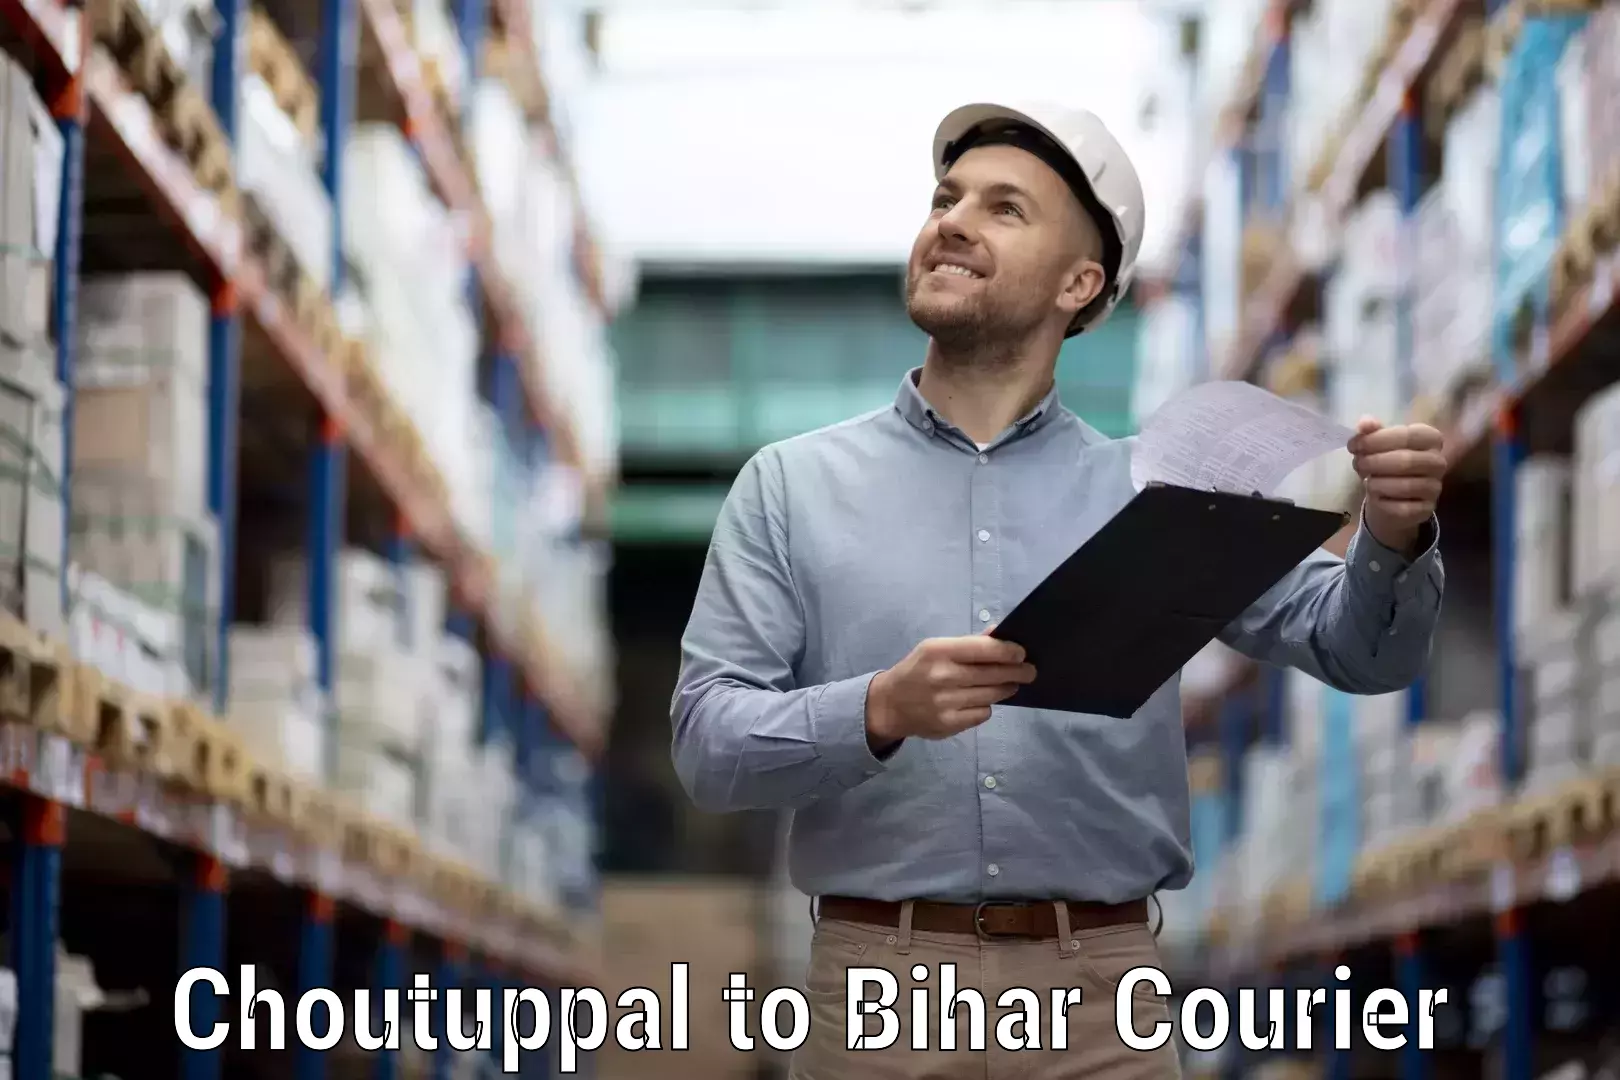 Courier service comparison Choutuppal to Bhorey